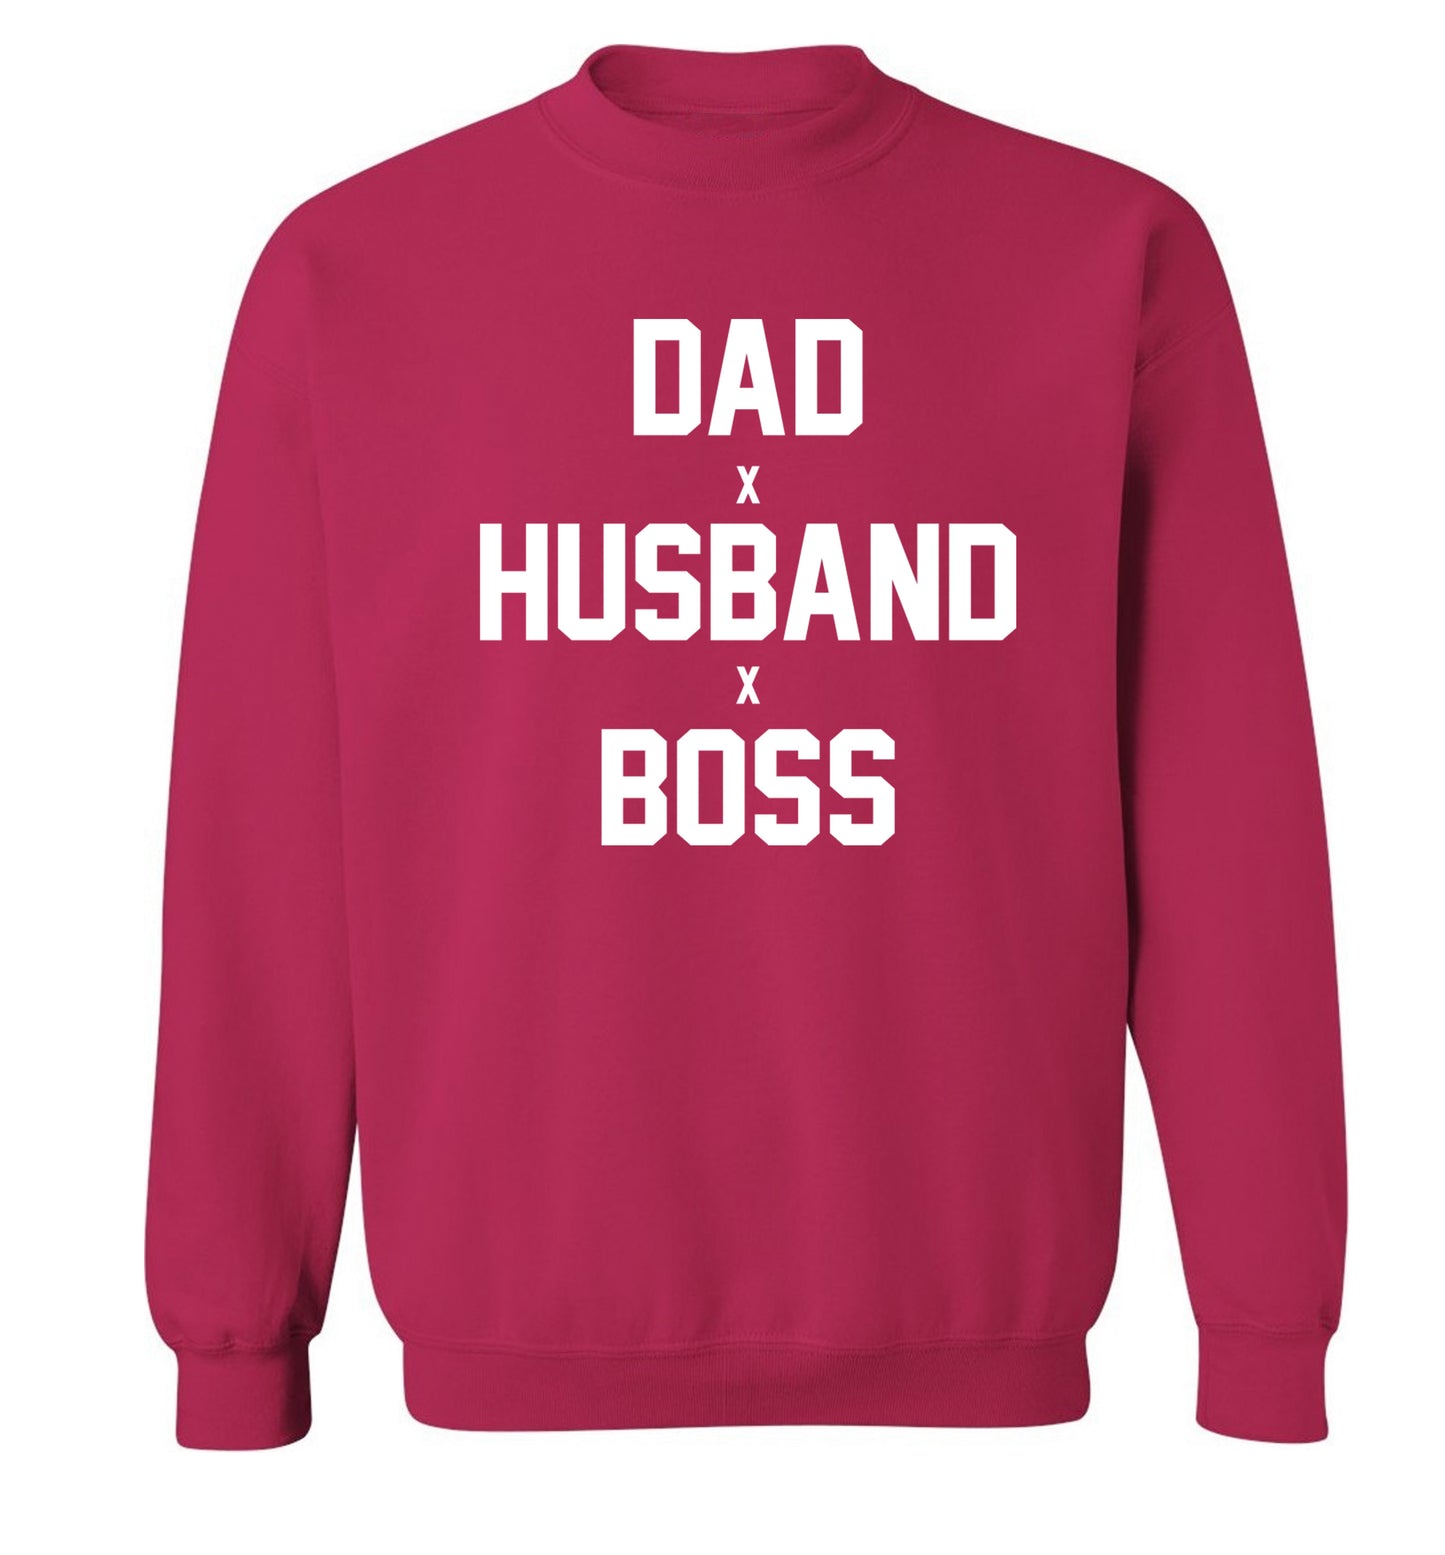 Dad husband boss Adult's unisex pink Sweater 2XL